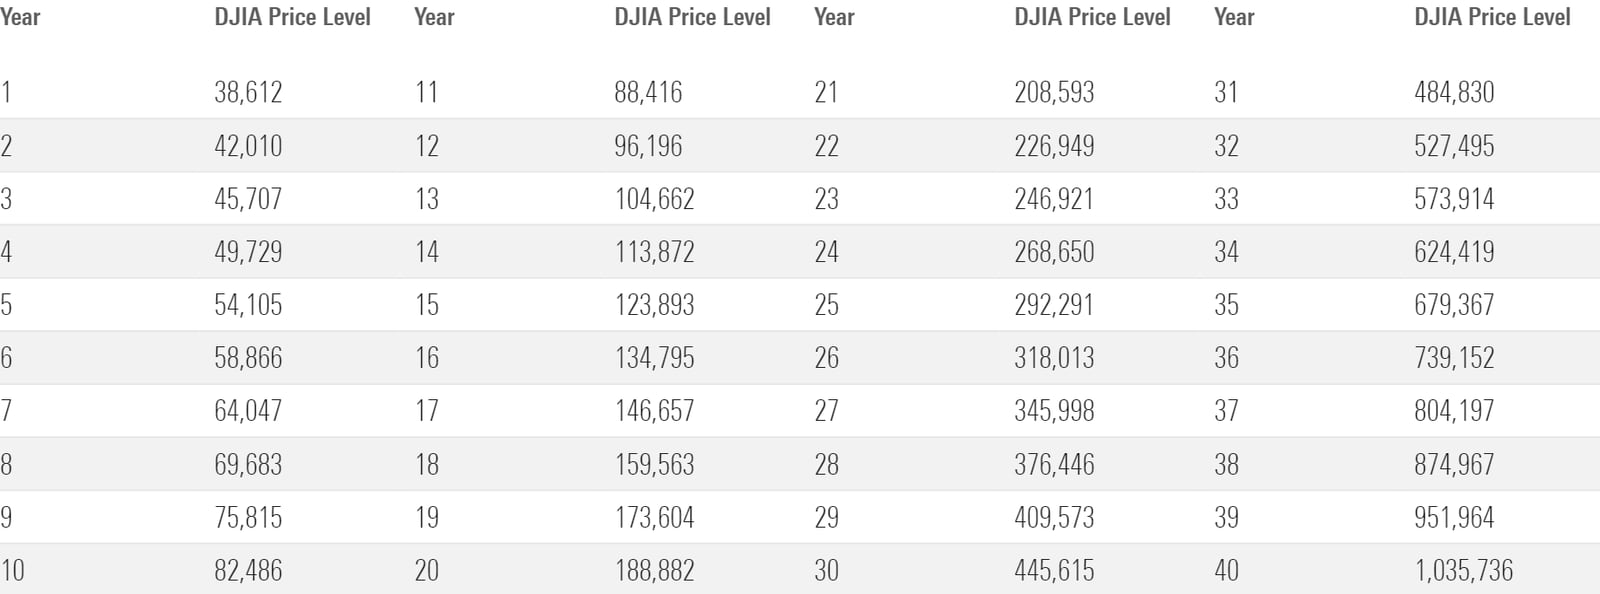 DJIA averages